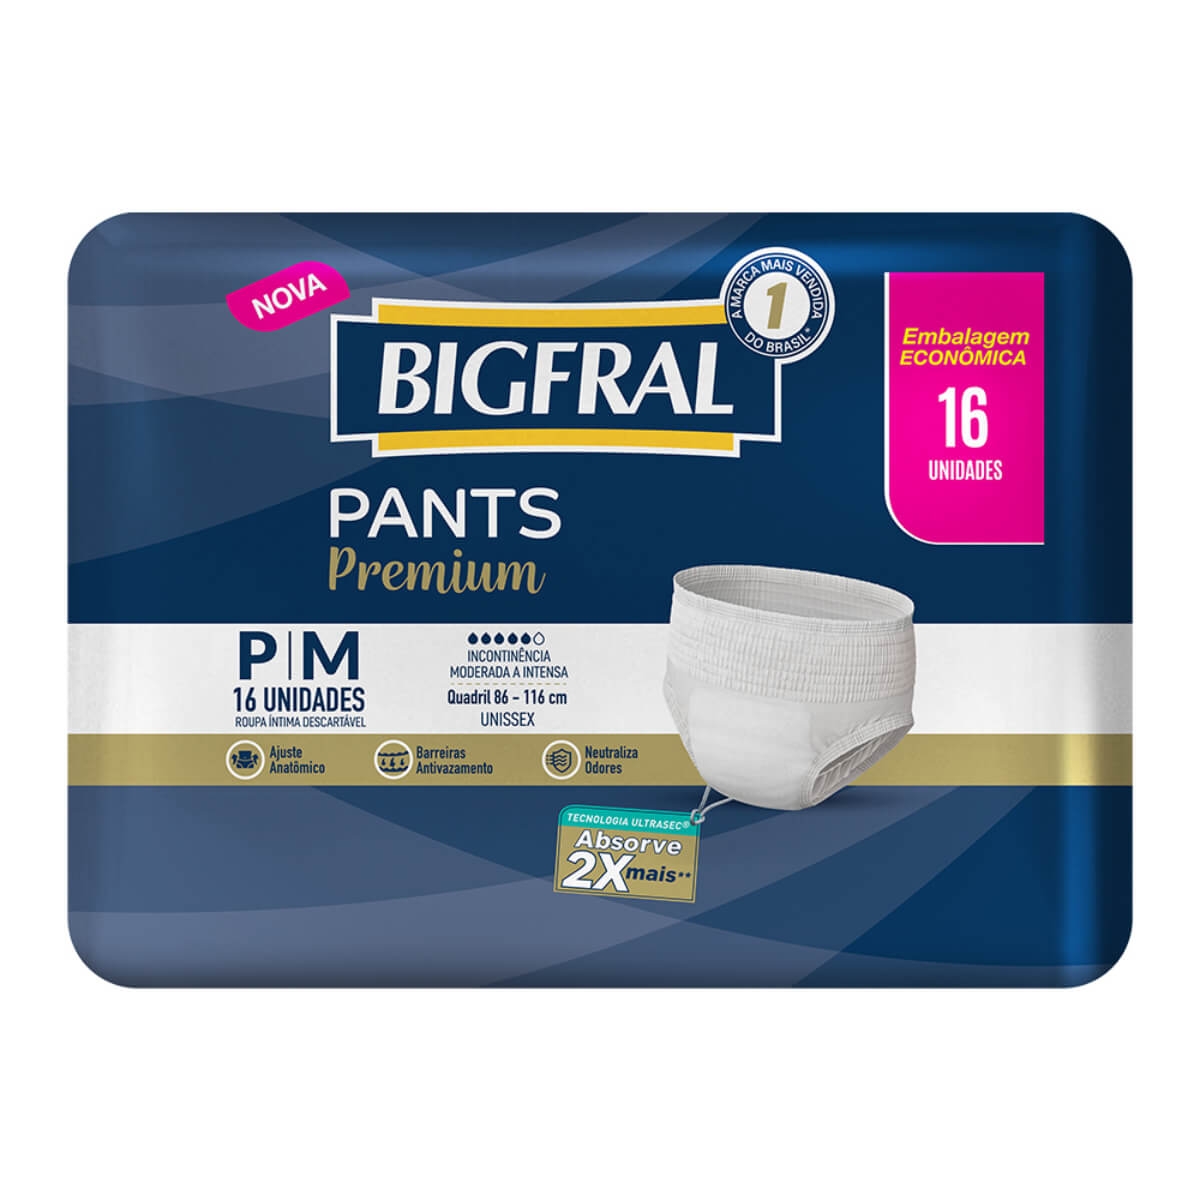 Roupa Íntima Bigfral Pants Premium Tamanho P/M 16 Unidades